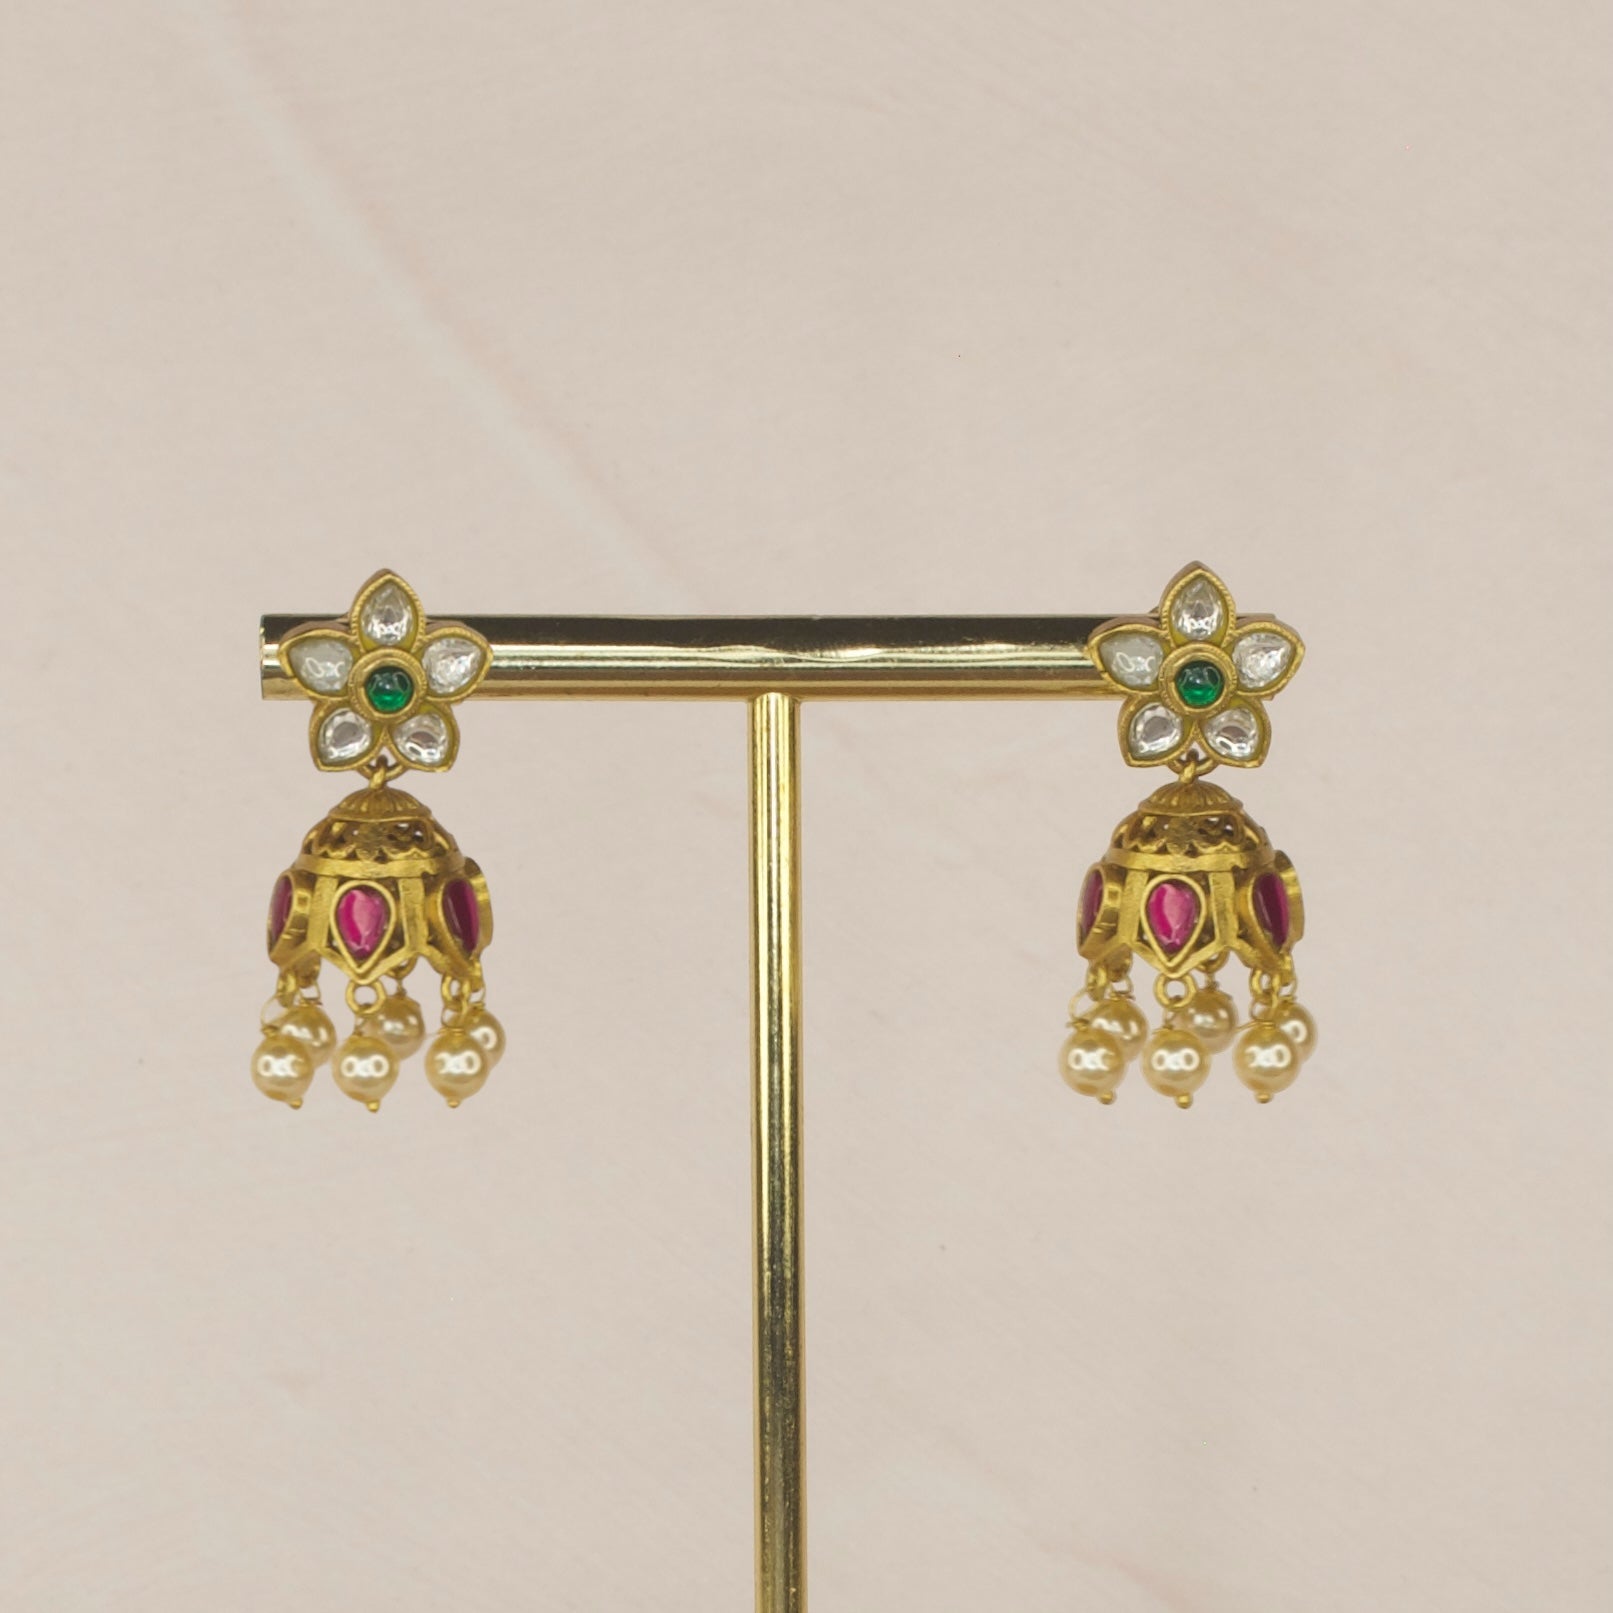 Petite Blossom Jadau Kundan Jhumkas with Pearl Accents with 22k gold plating. This product belongs to jadau Kundan jewellery category